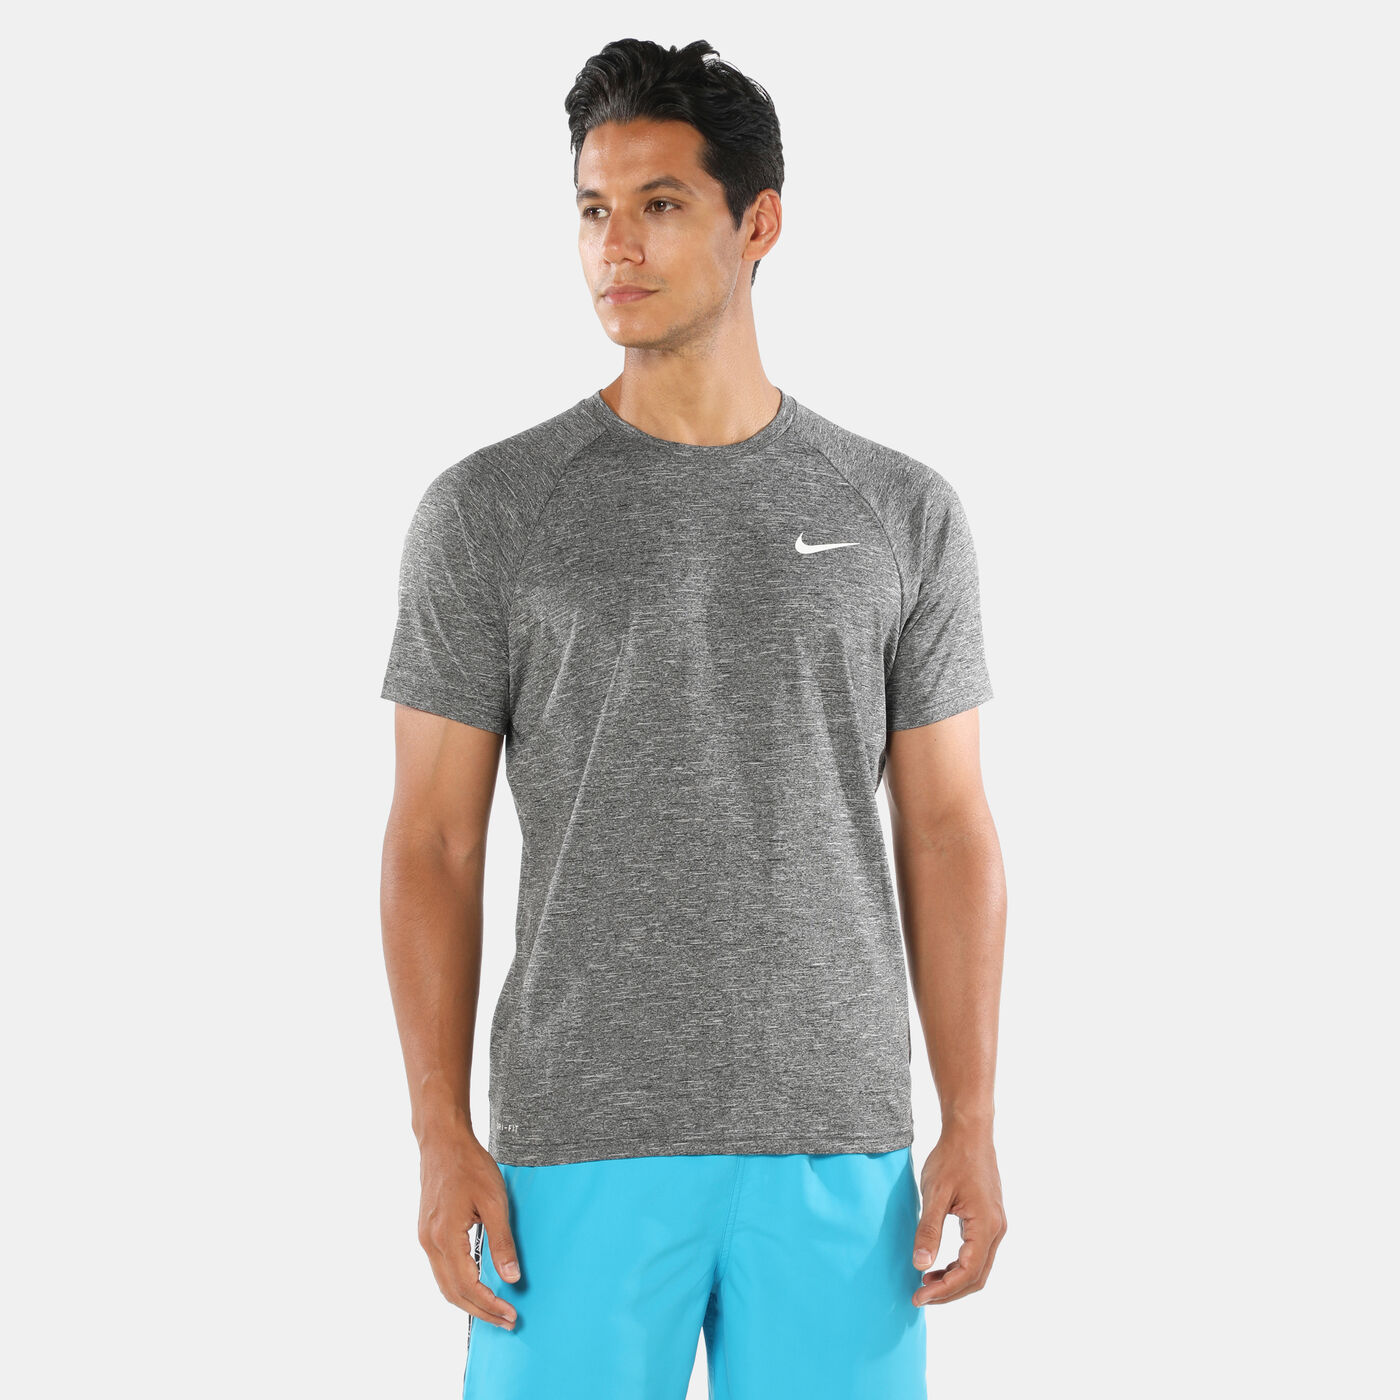 Men's Heathered Hydroguard Swimming Shirt